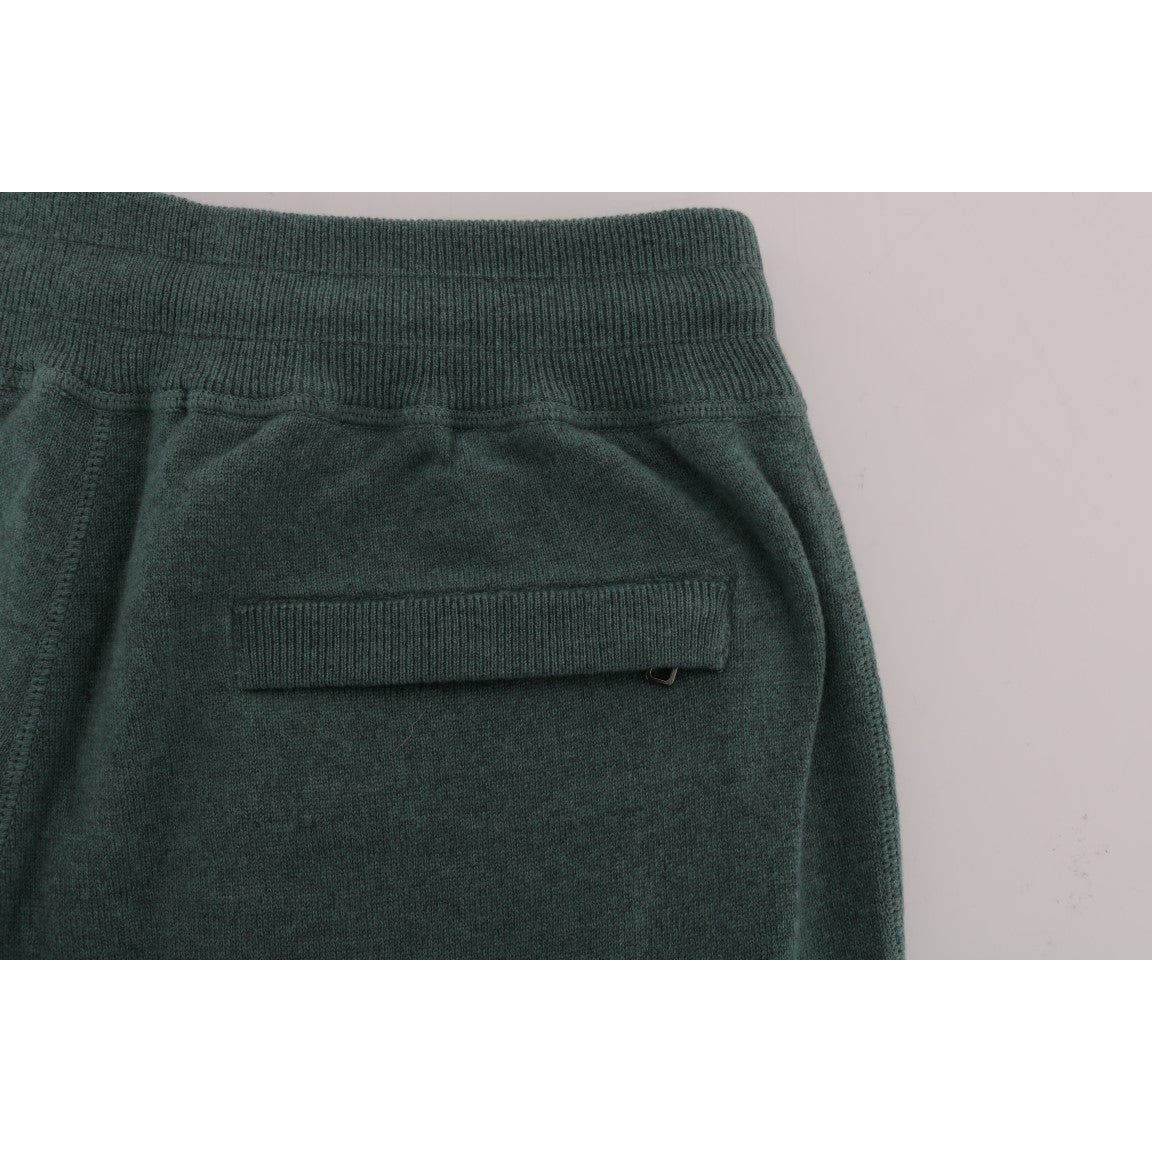 Dolce & Gabbana Elegant Green Cashmere Sport Pants green-cashmere-training-pants 346330-green-cashmere-training-pants-4.jpg